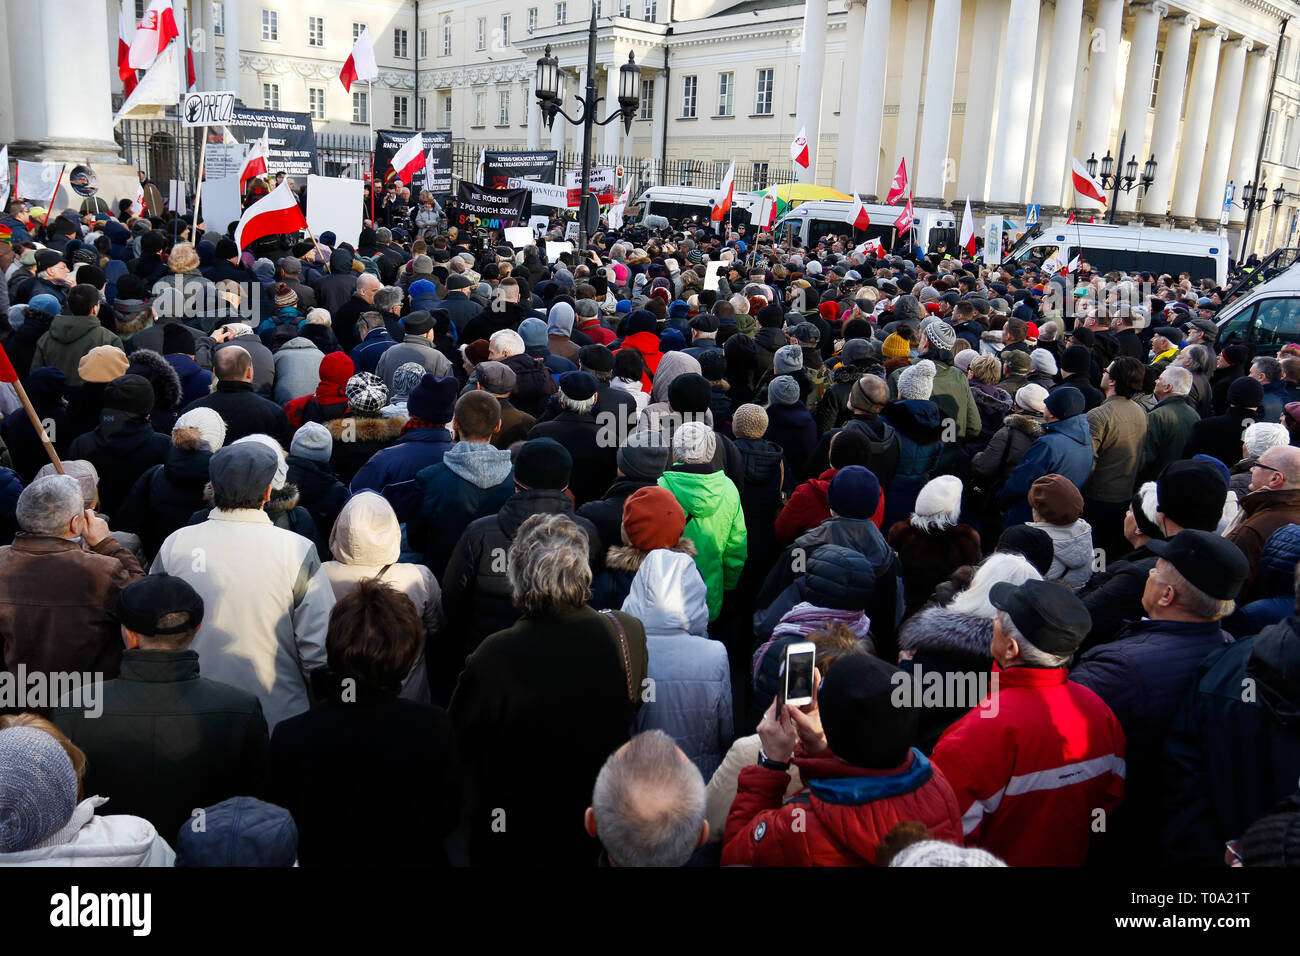 Warschau, Polen. 18. Mär 2019. Protest gegen LGBT-Erklärungen, Kredit: Lidia Mukhamadeeva/Alamy leben Nachrichten Stockfoto